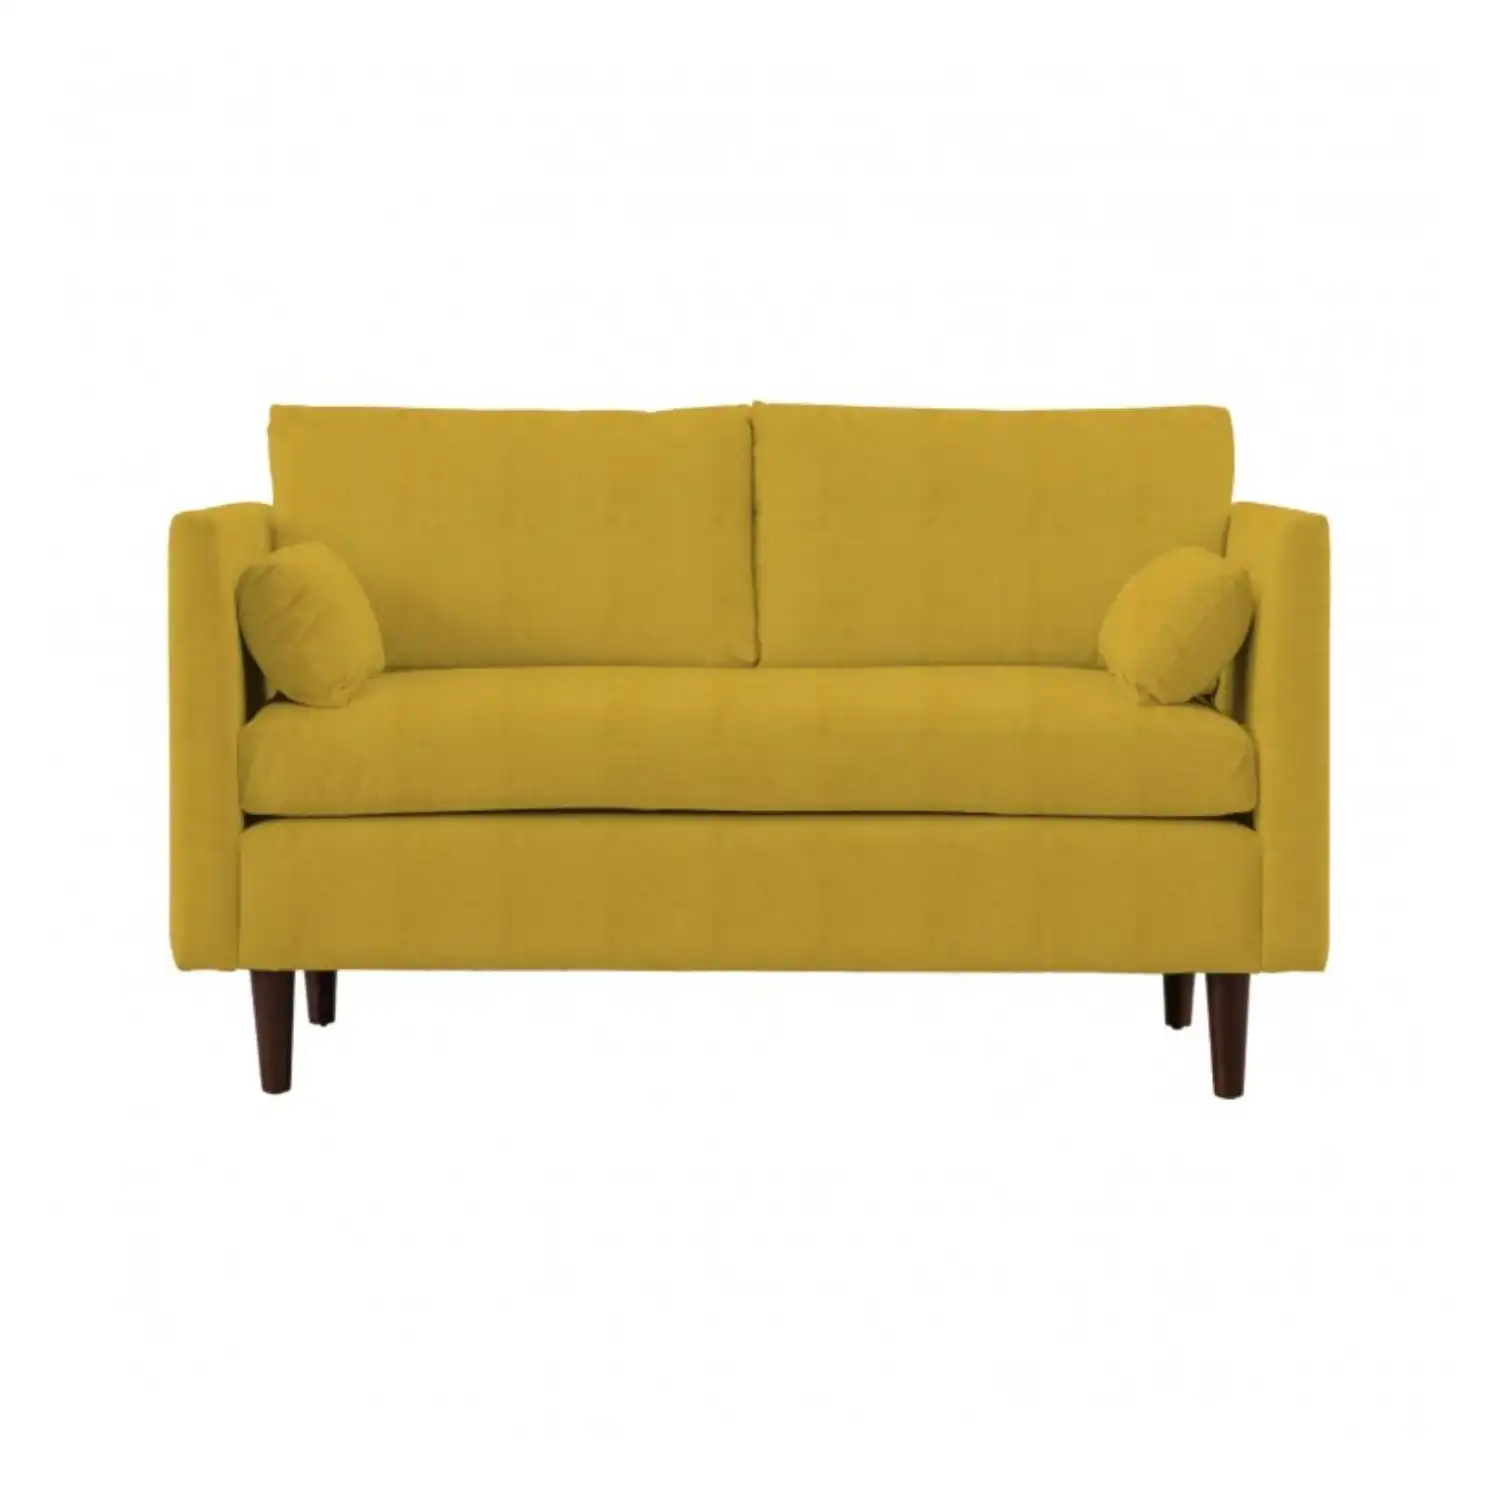 Townhouse Model 3 Yellow 2 Seater Sofa